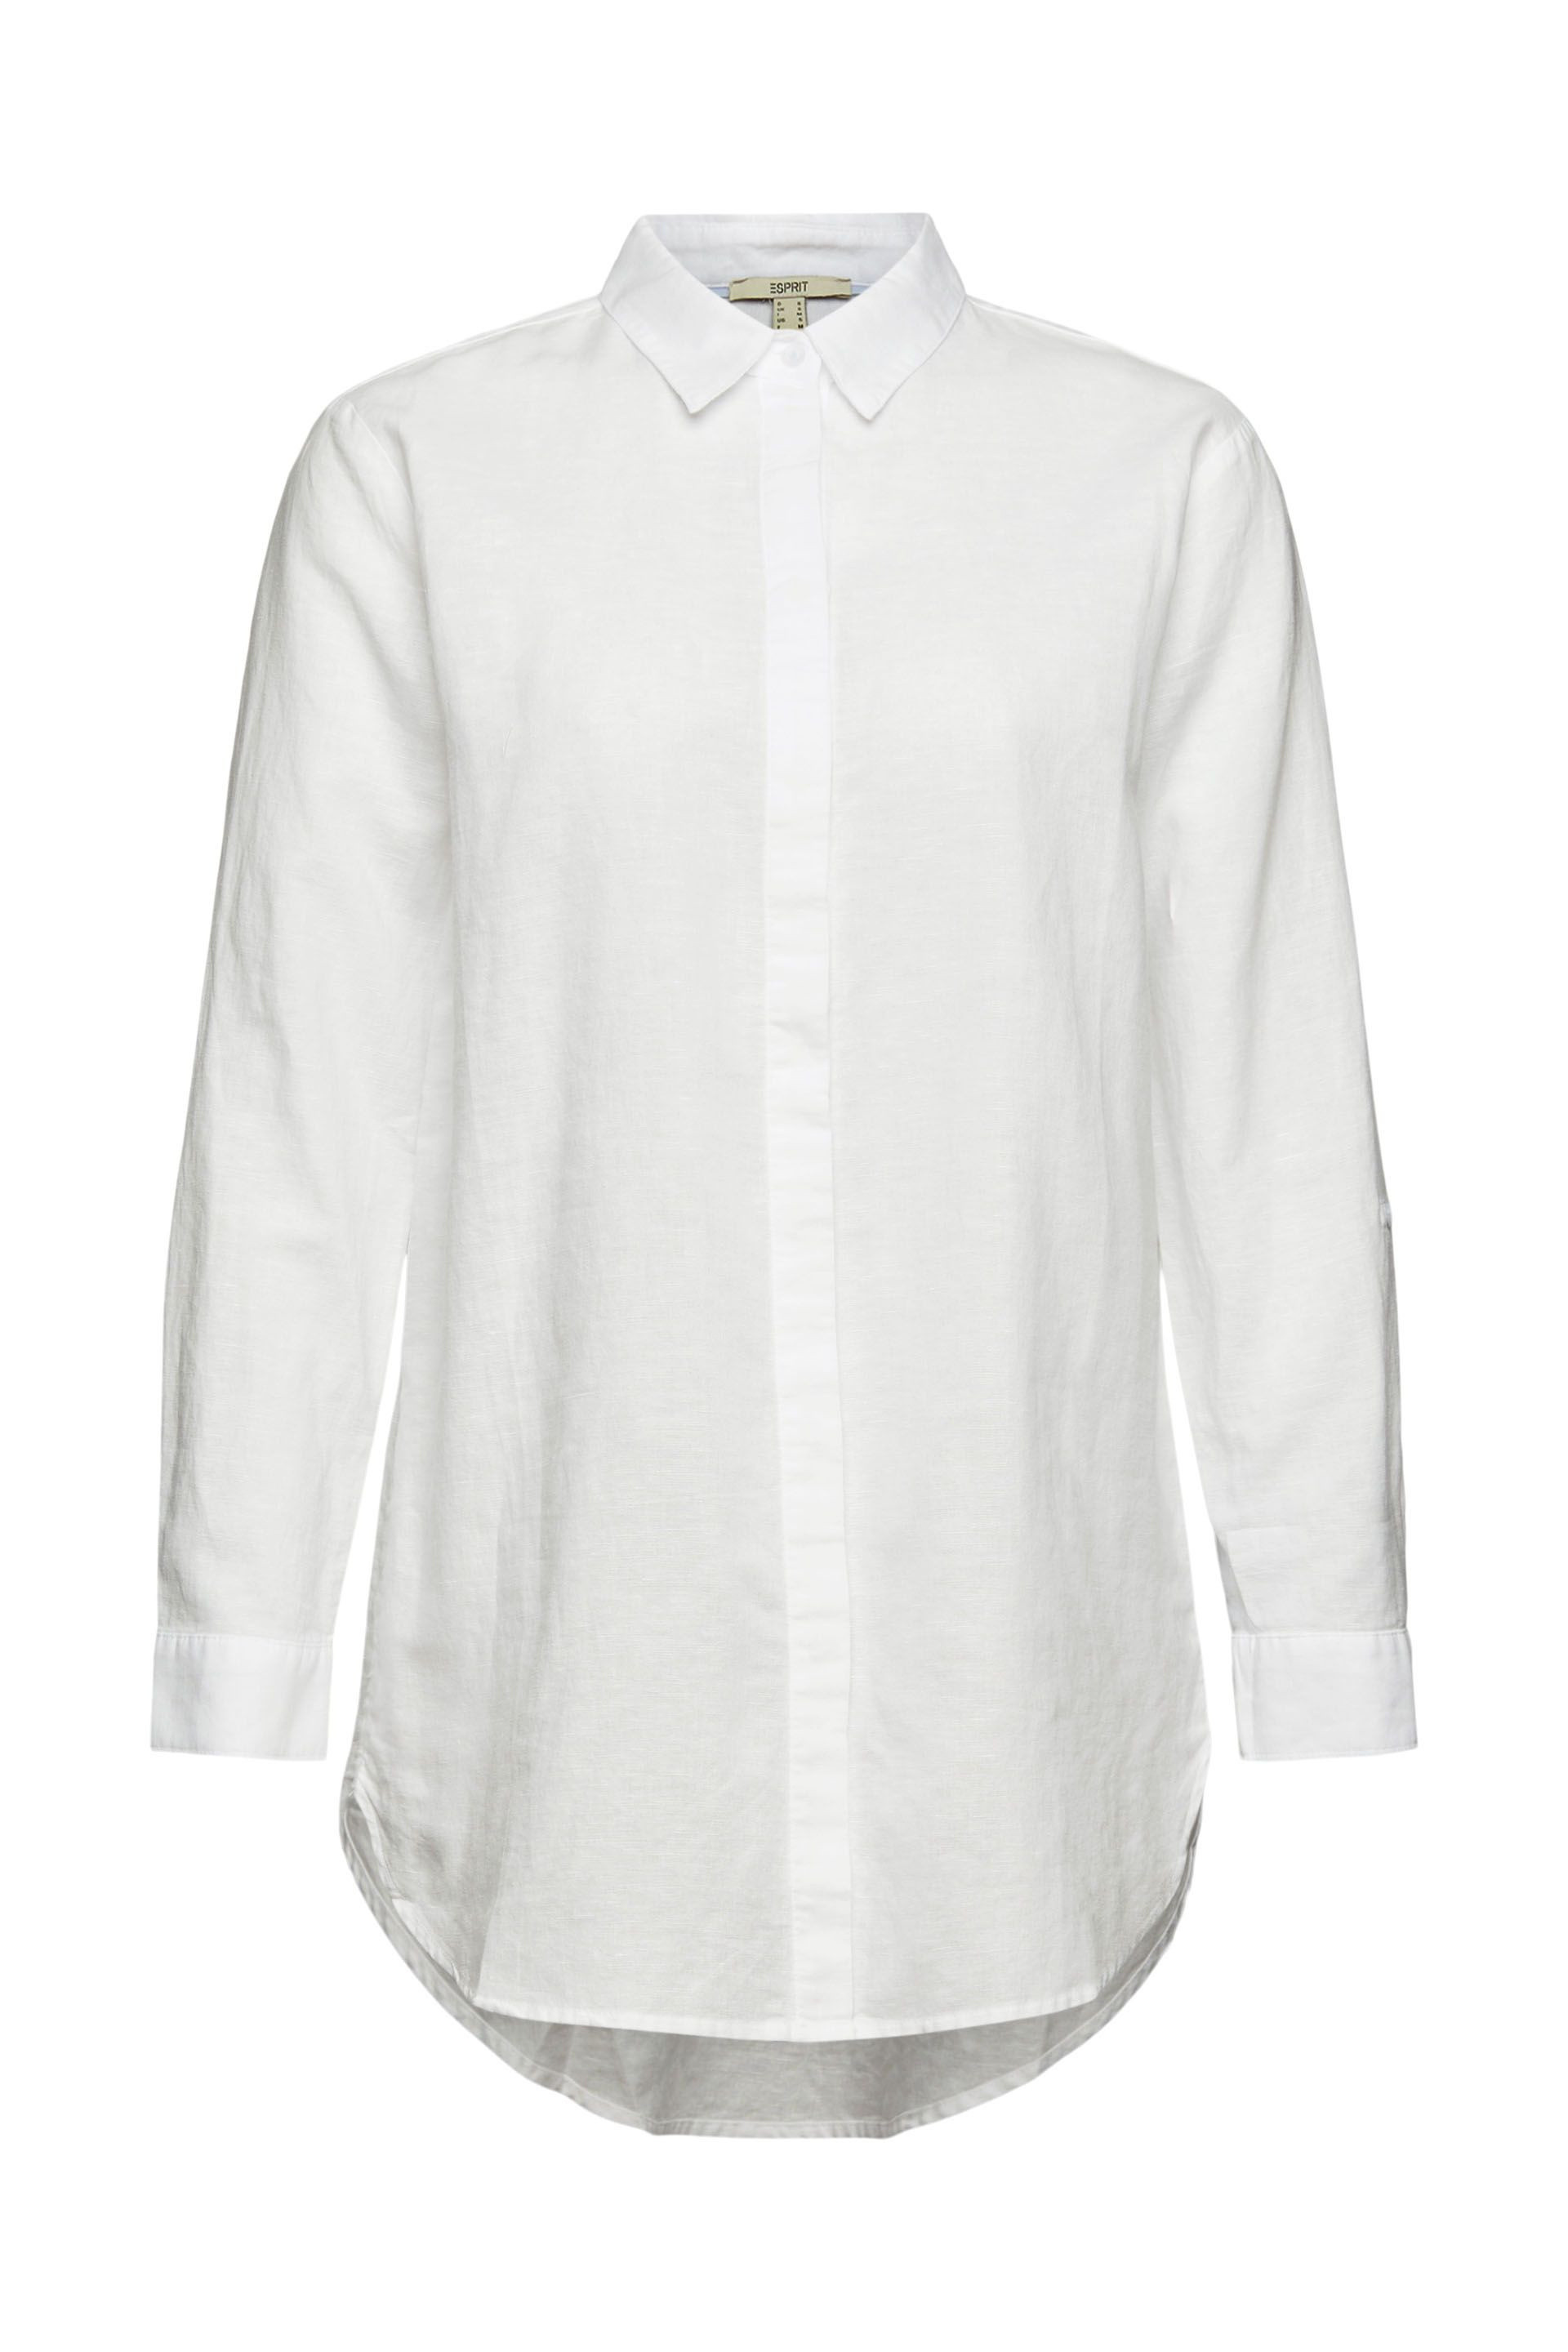 Linen blend shirt, White, large image number 0